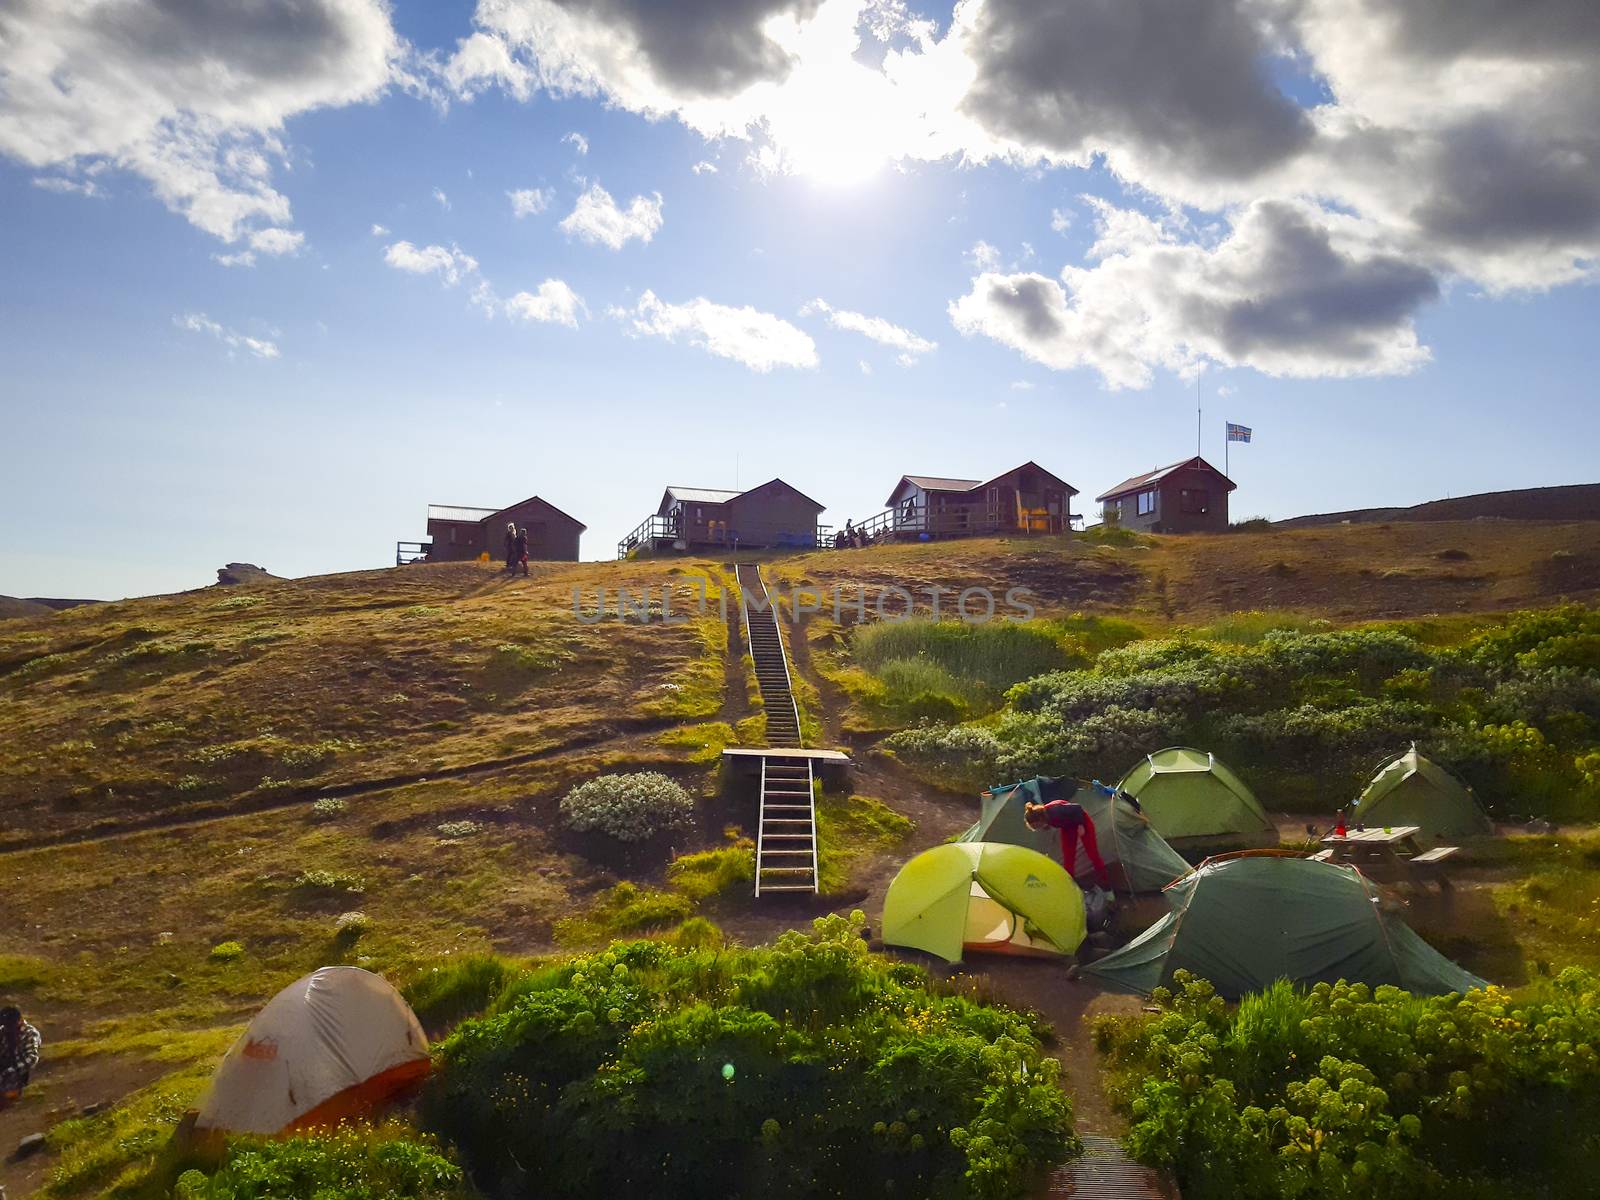 Emstrur, Iceland, July 2020: view on emstrur botnar hut and camping ground on the laugavegur hiking trail. by kb79